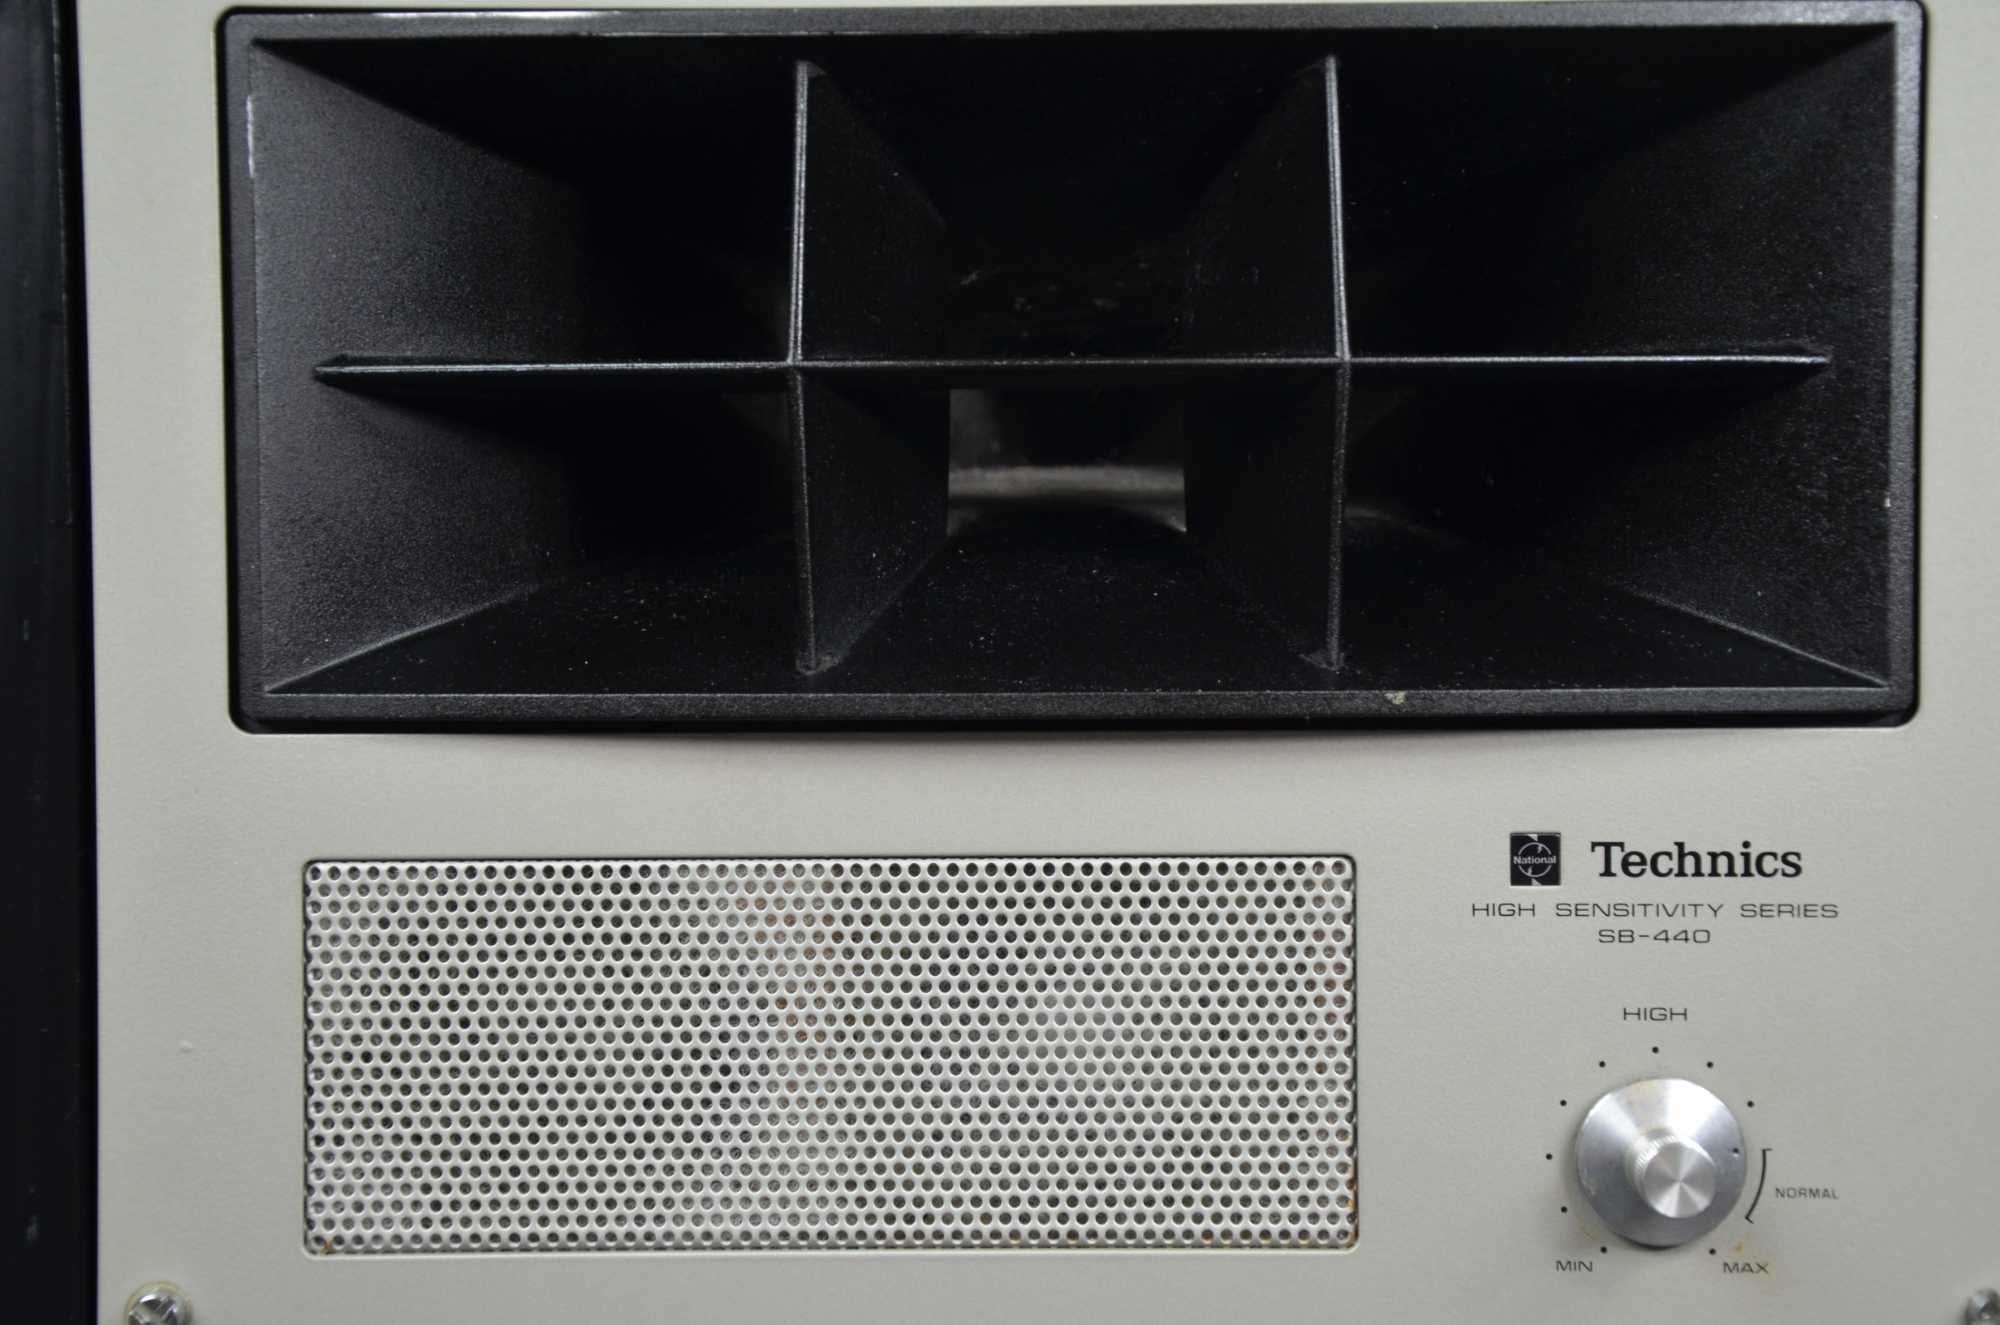 SOLIDNE KOLUMNY TECHNICS SB-440 audiofilskie vintage